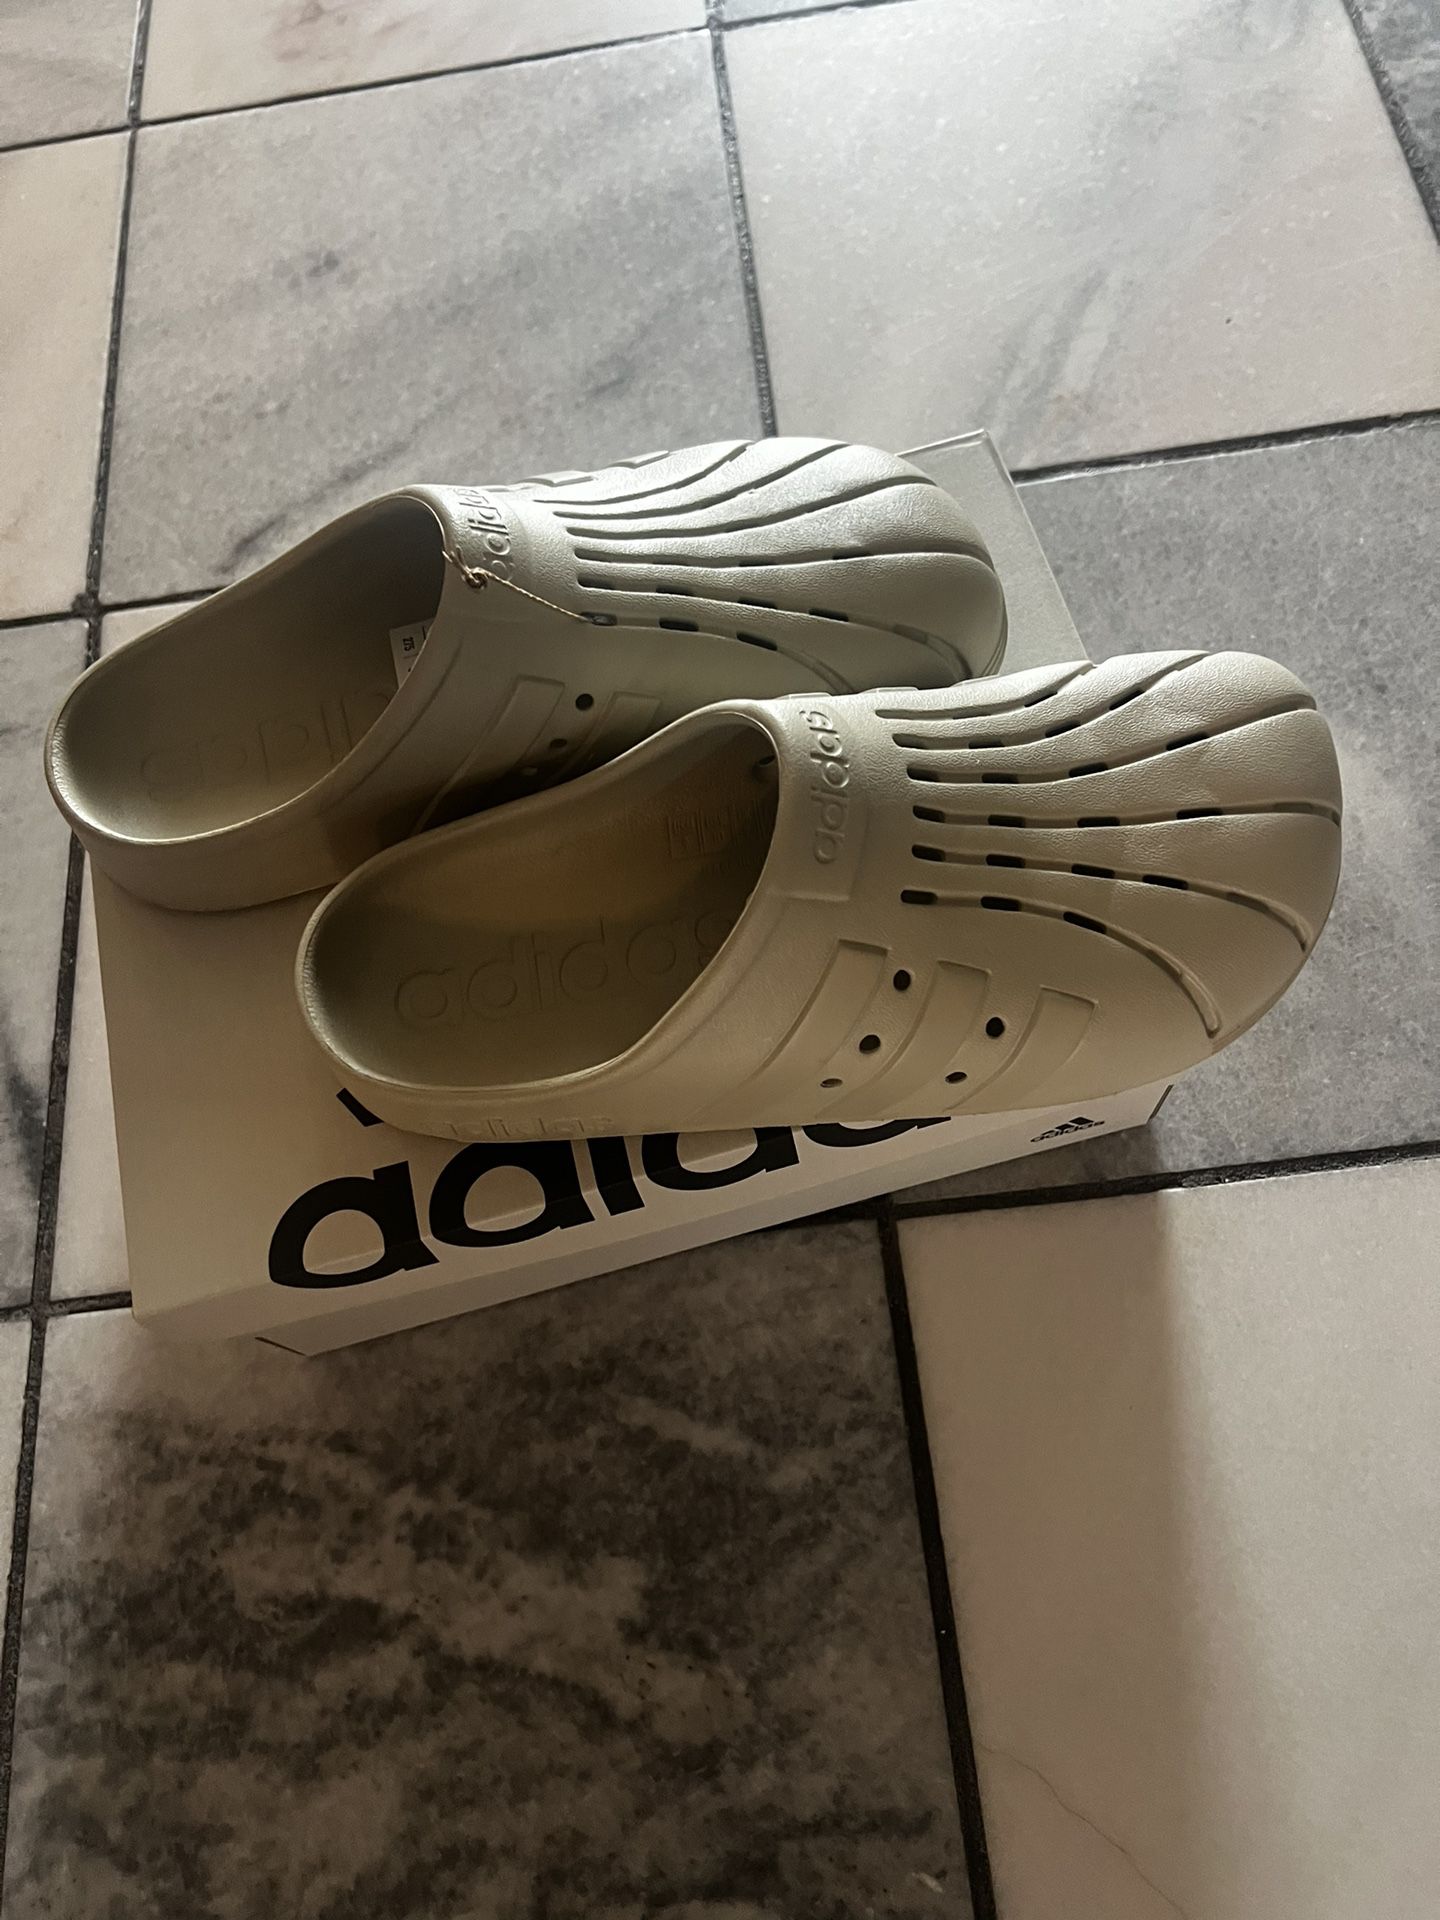 New adidas clog sandals